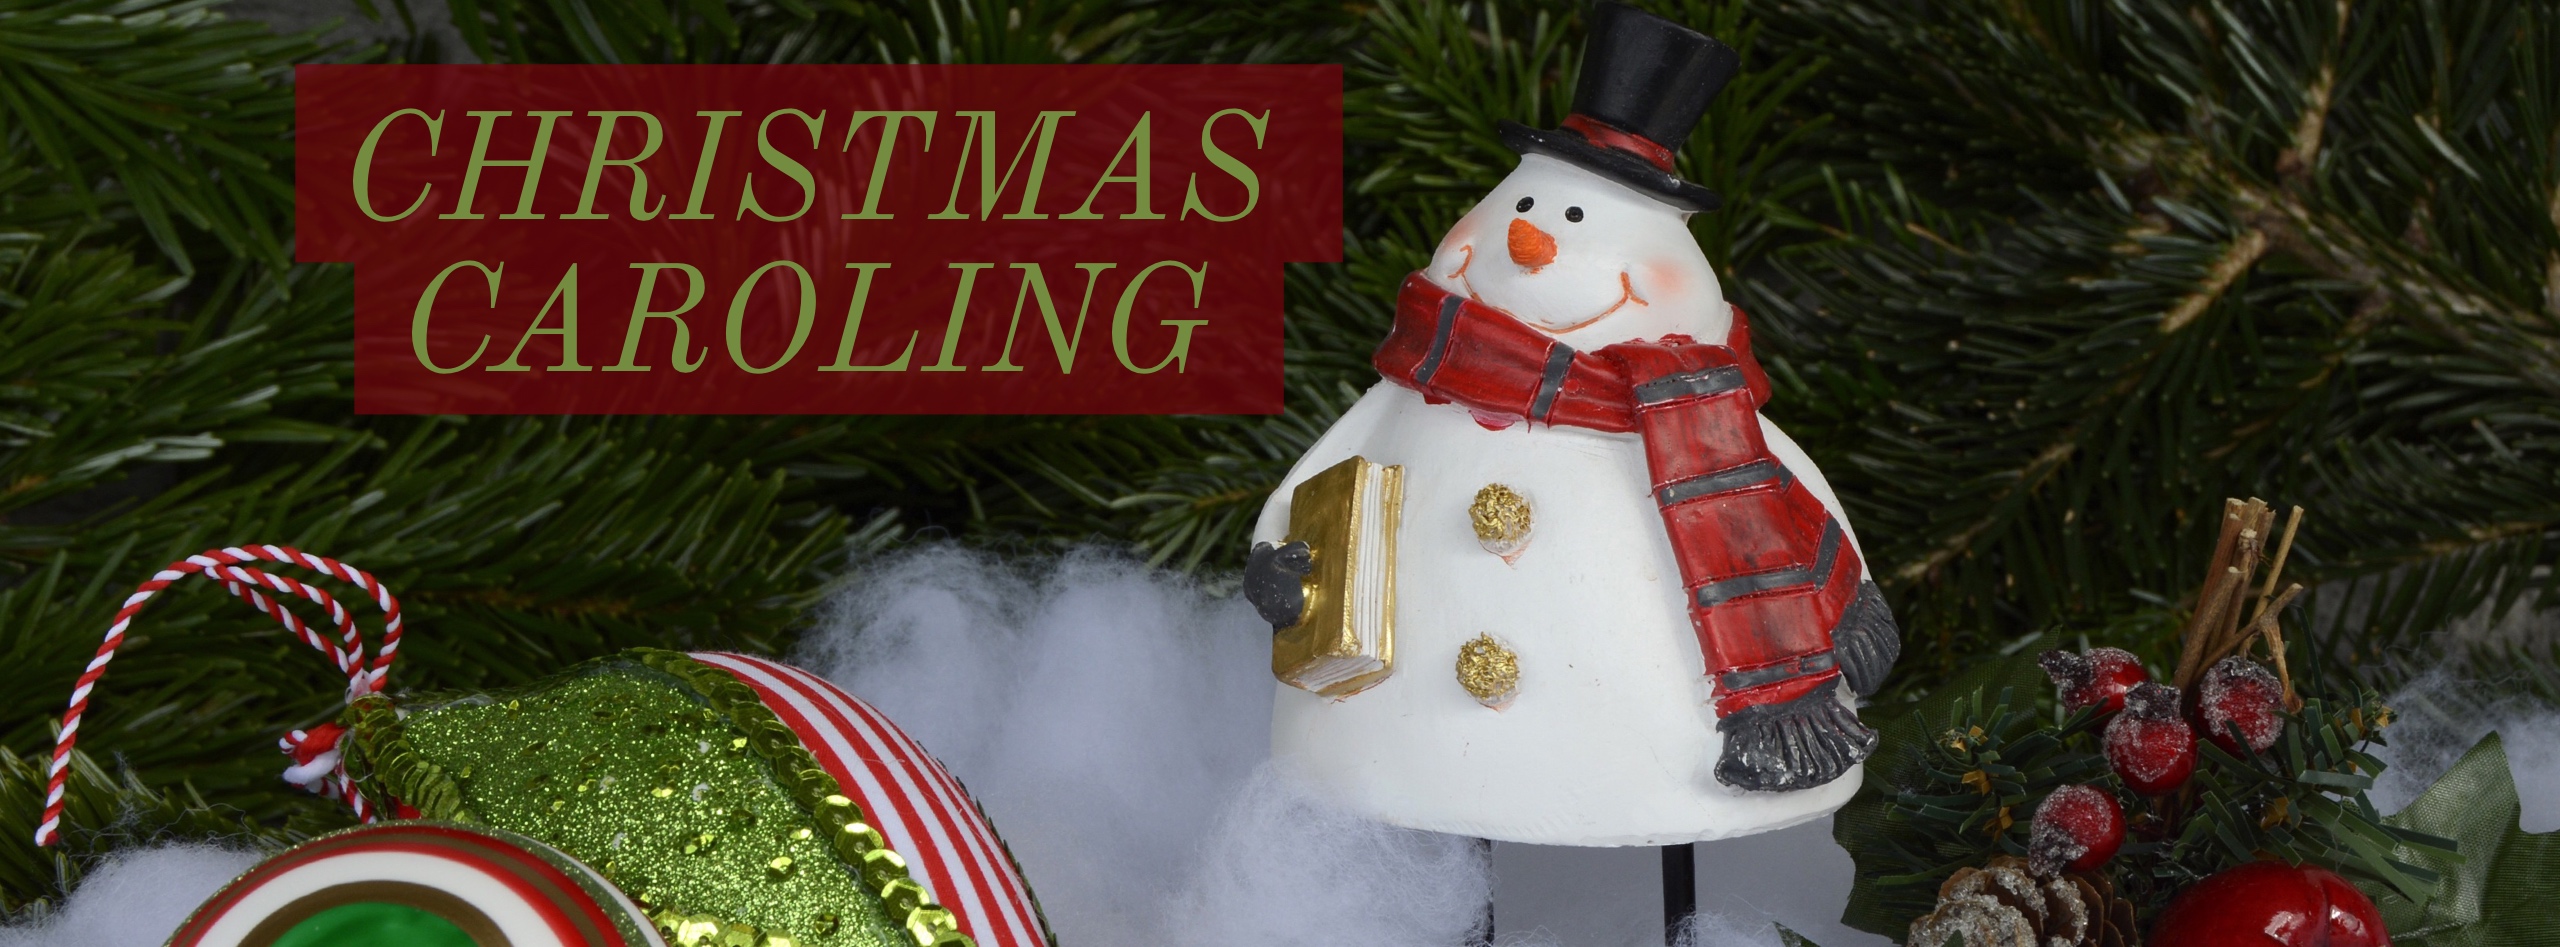 Christmas Caroling – December 18